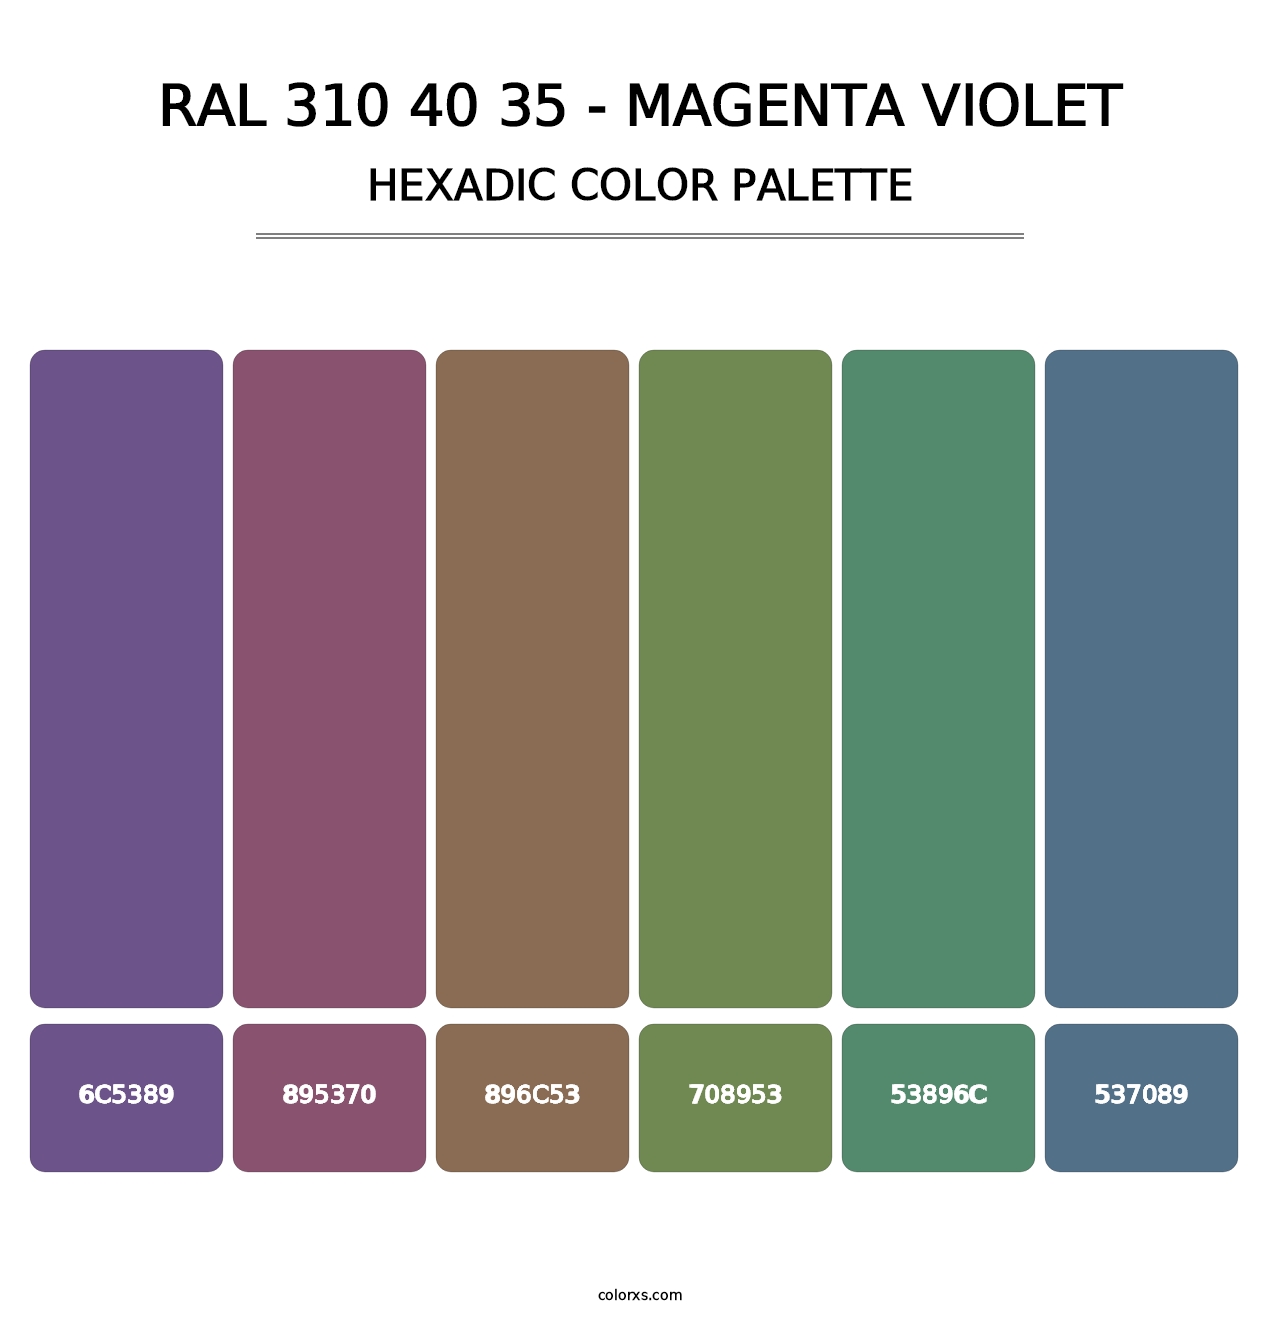 RAL 310 40 35 - Magenta Violet - Hexadic Color Palette